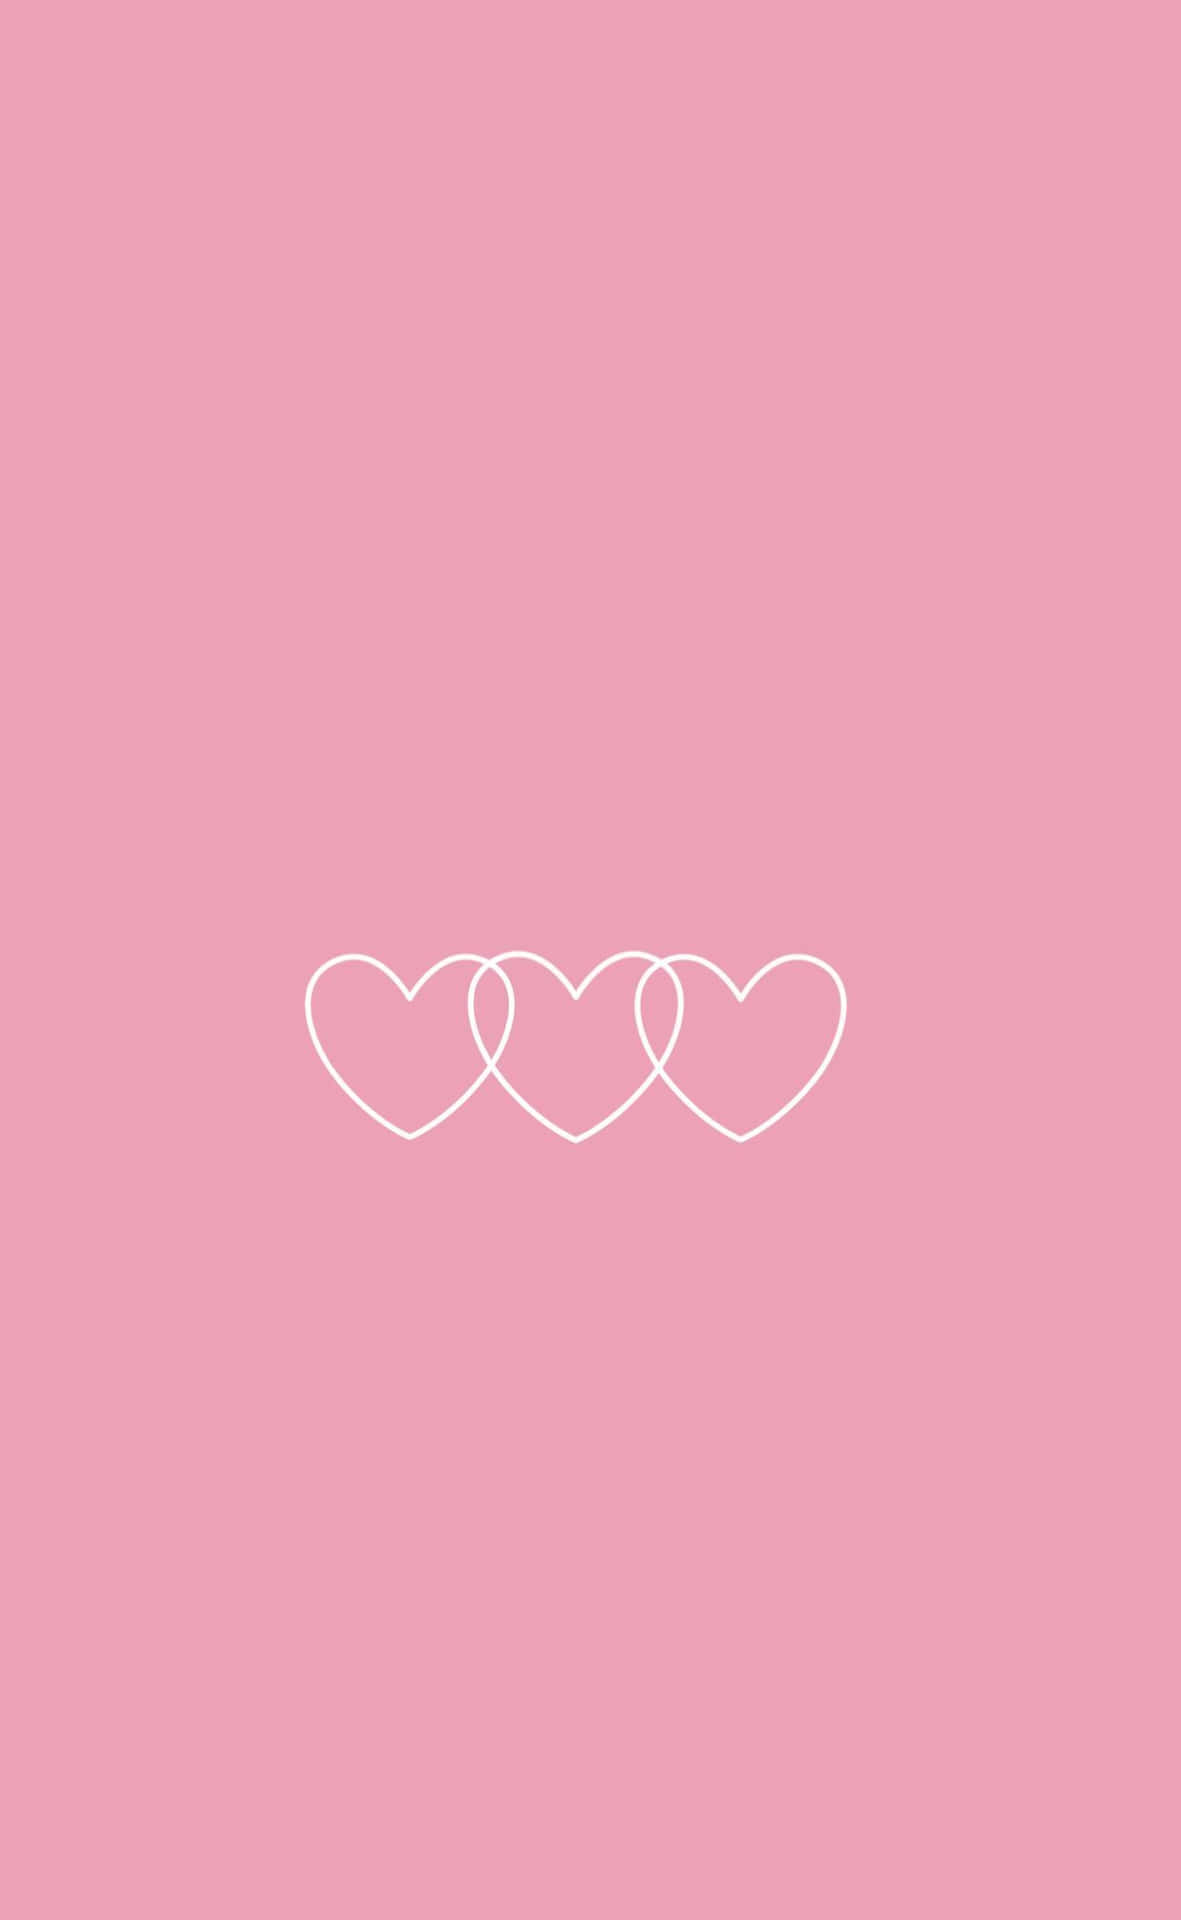 Blushing Garland: Beautiful White and Pink Background